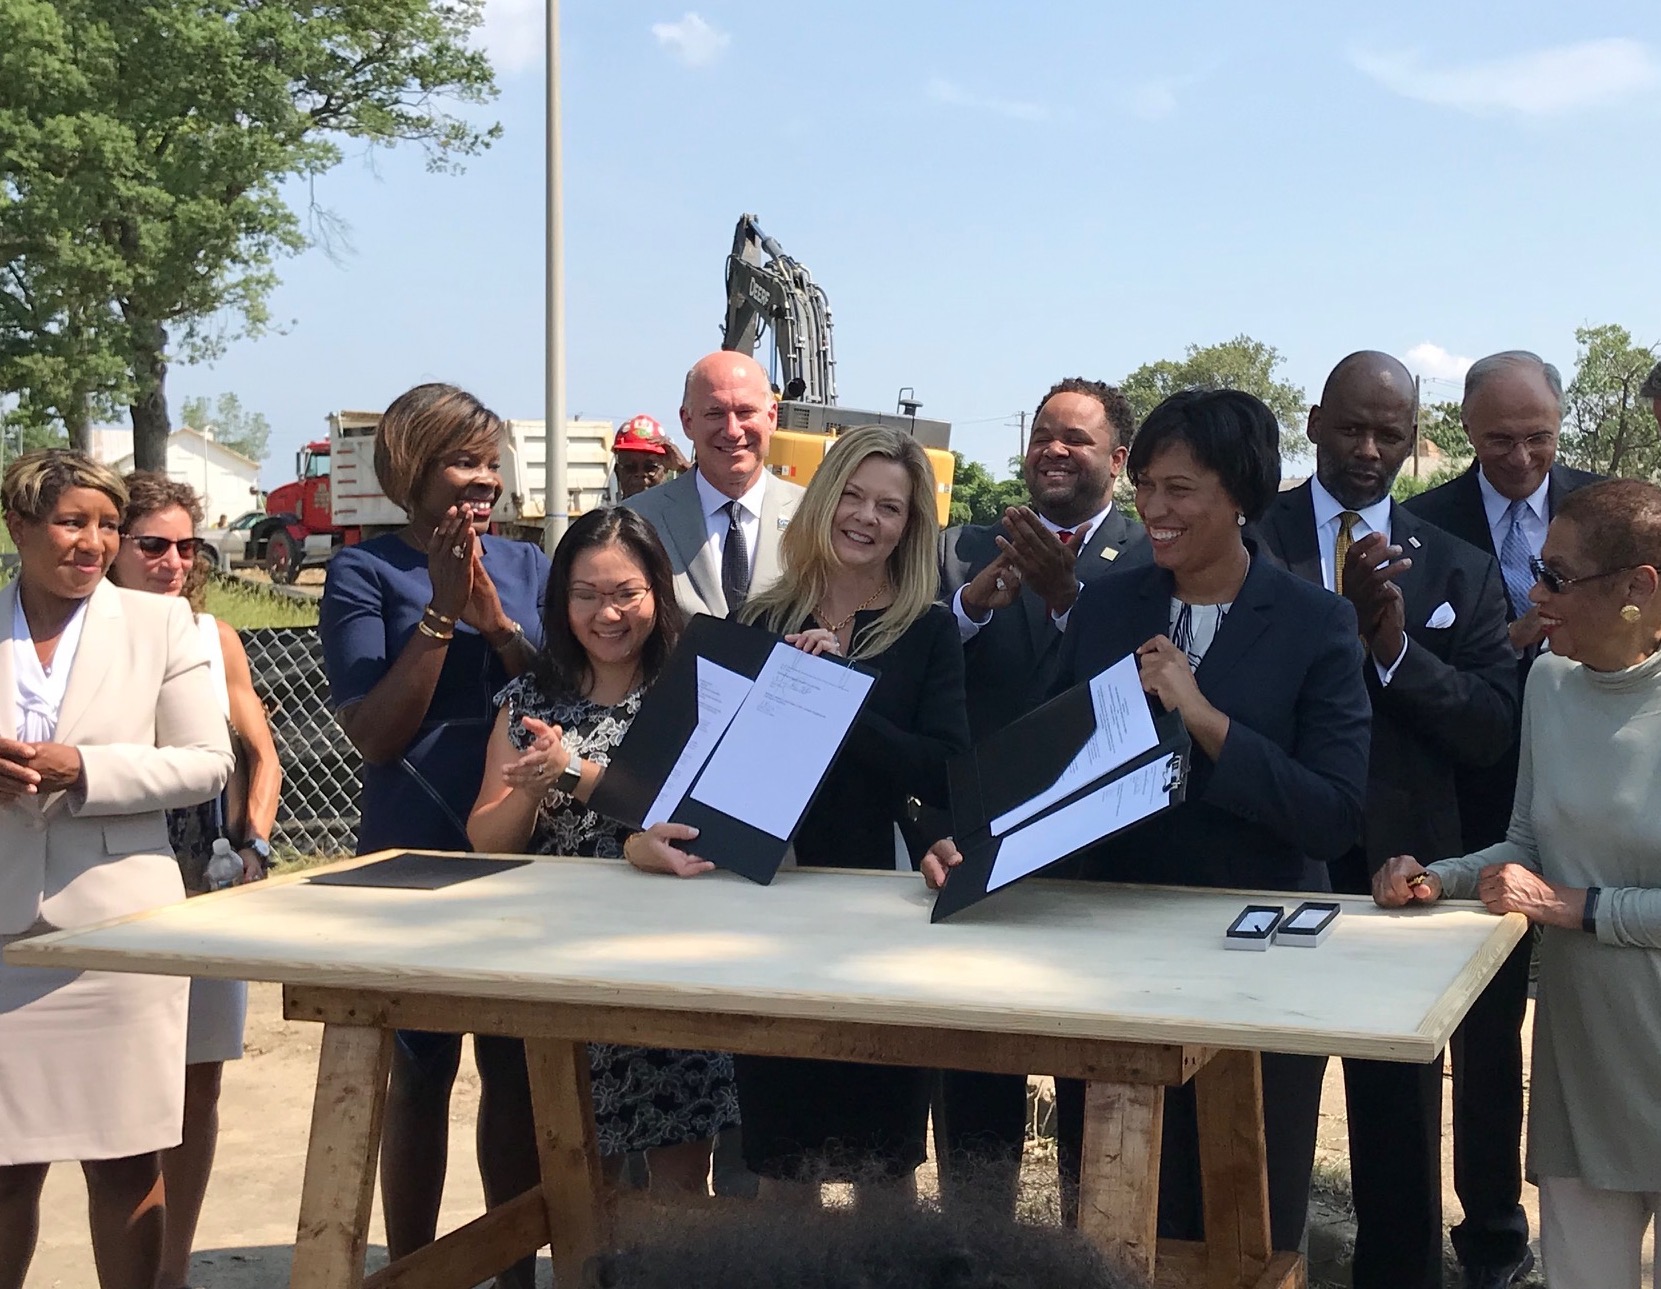 W Hospital and Mayor Bowser announce partnership to build new hospital